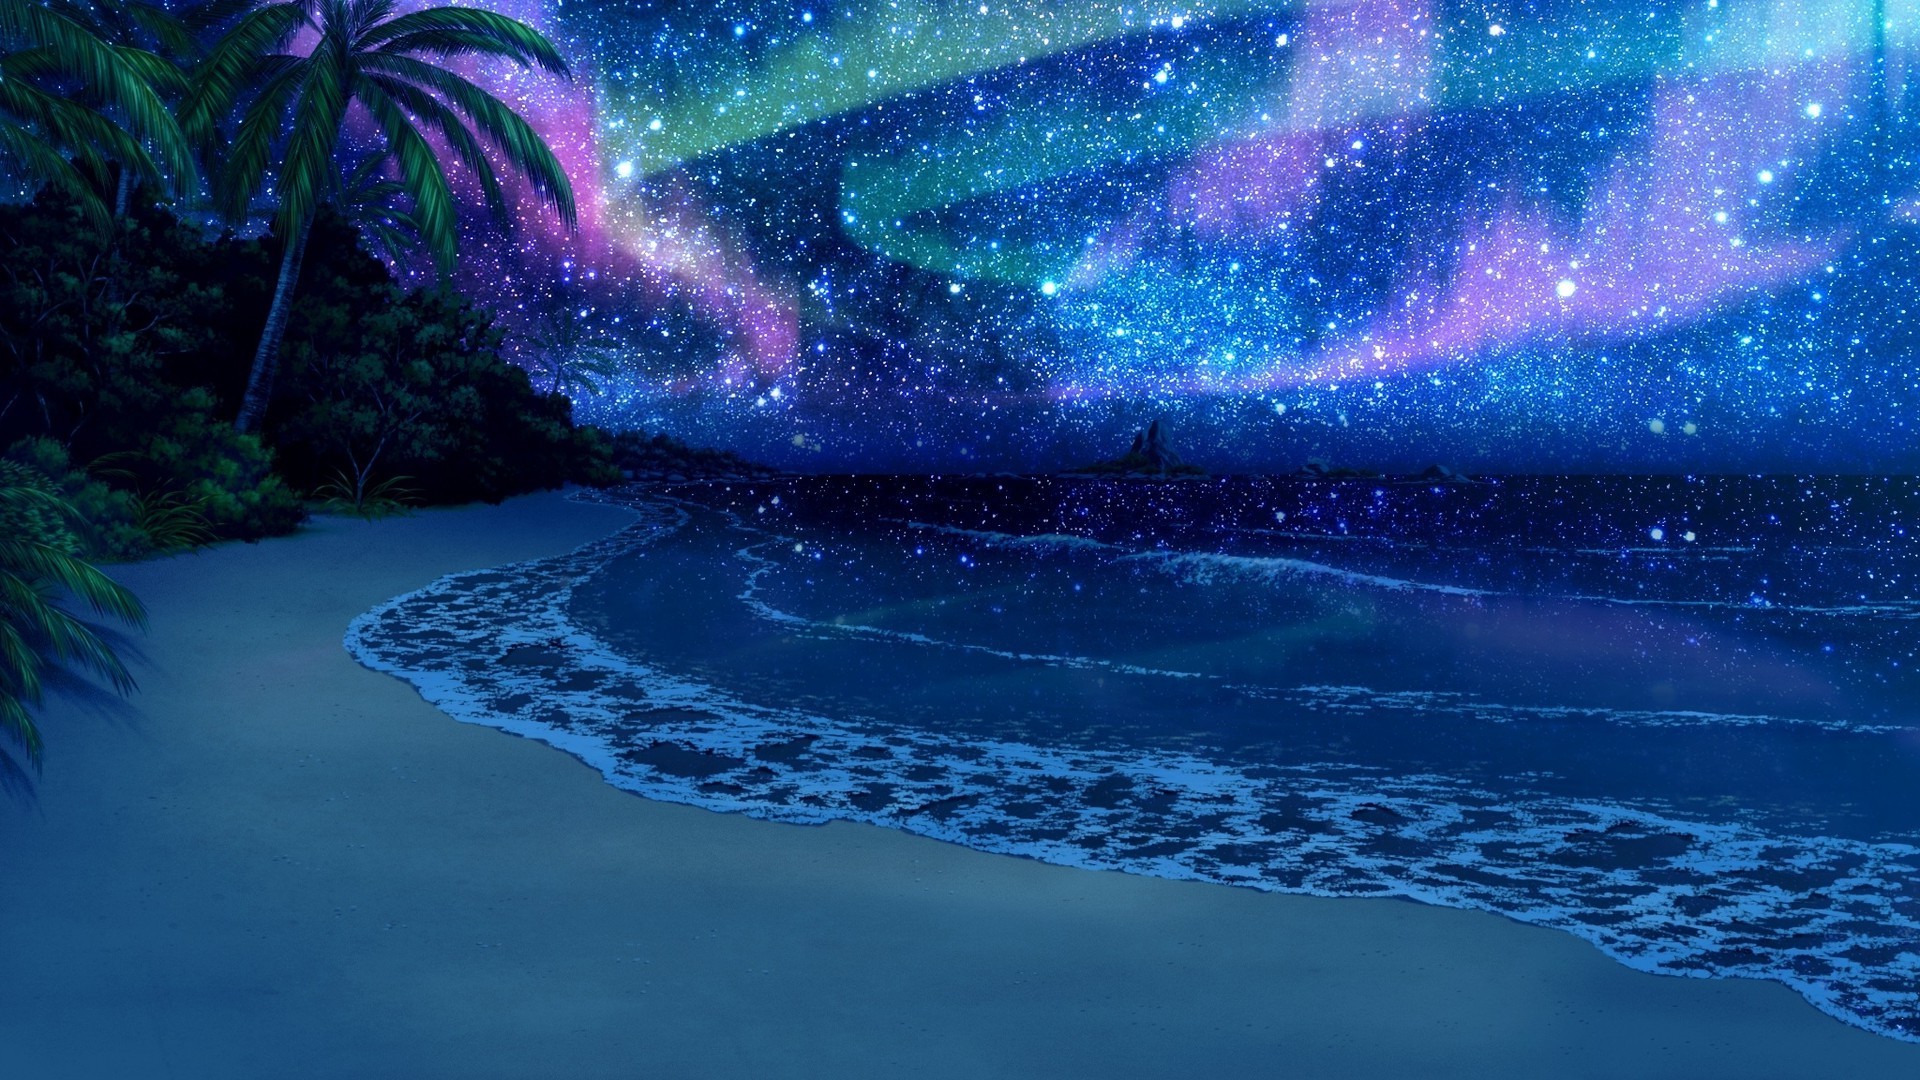 1920x1080 beach at night with stars wallpaper. stars beach at night with wallpaper o